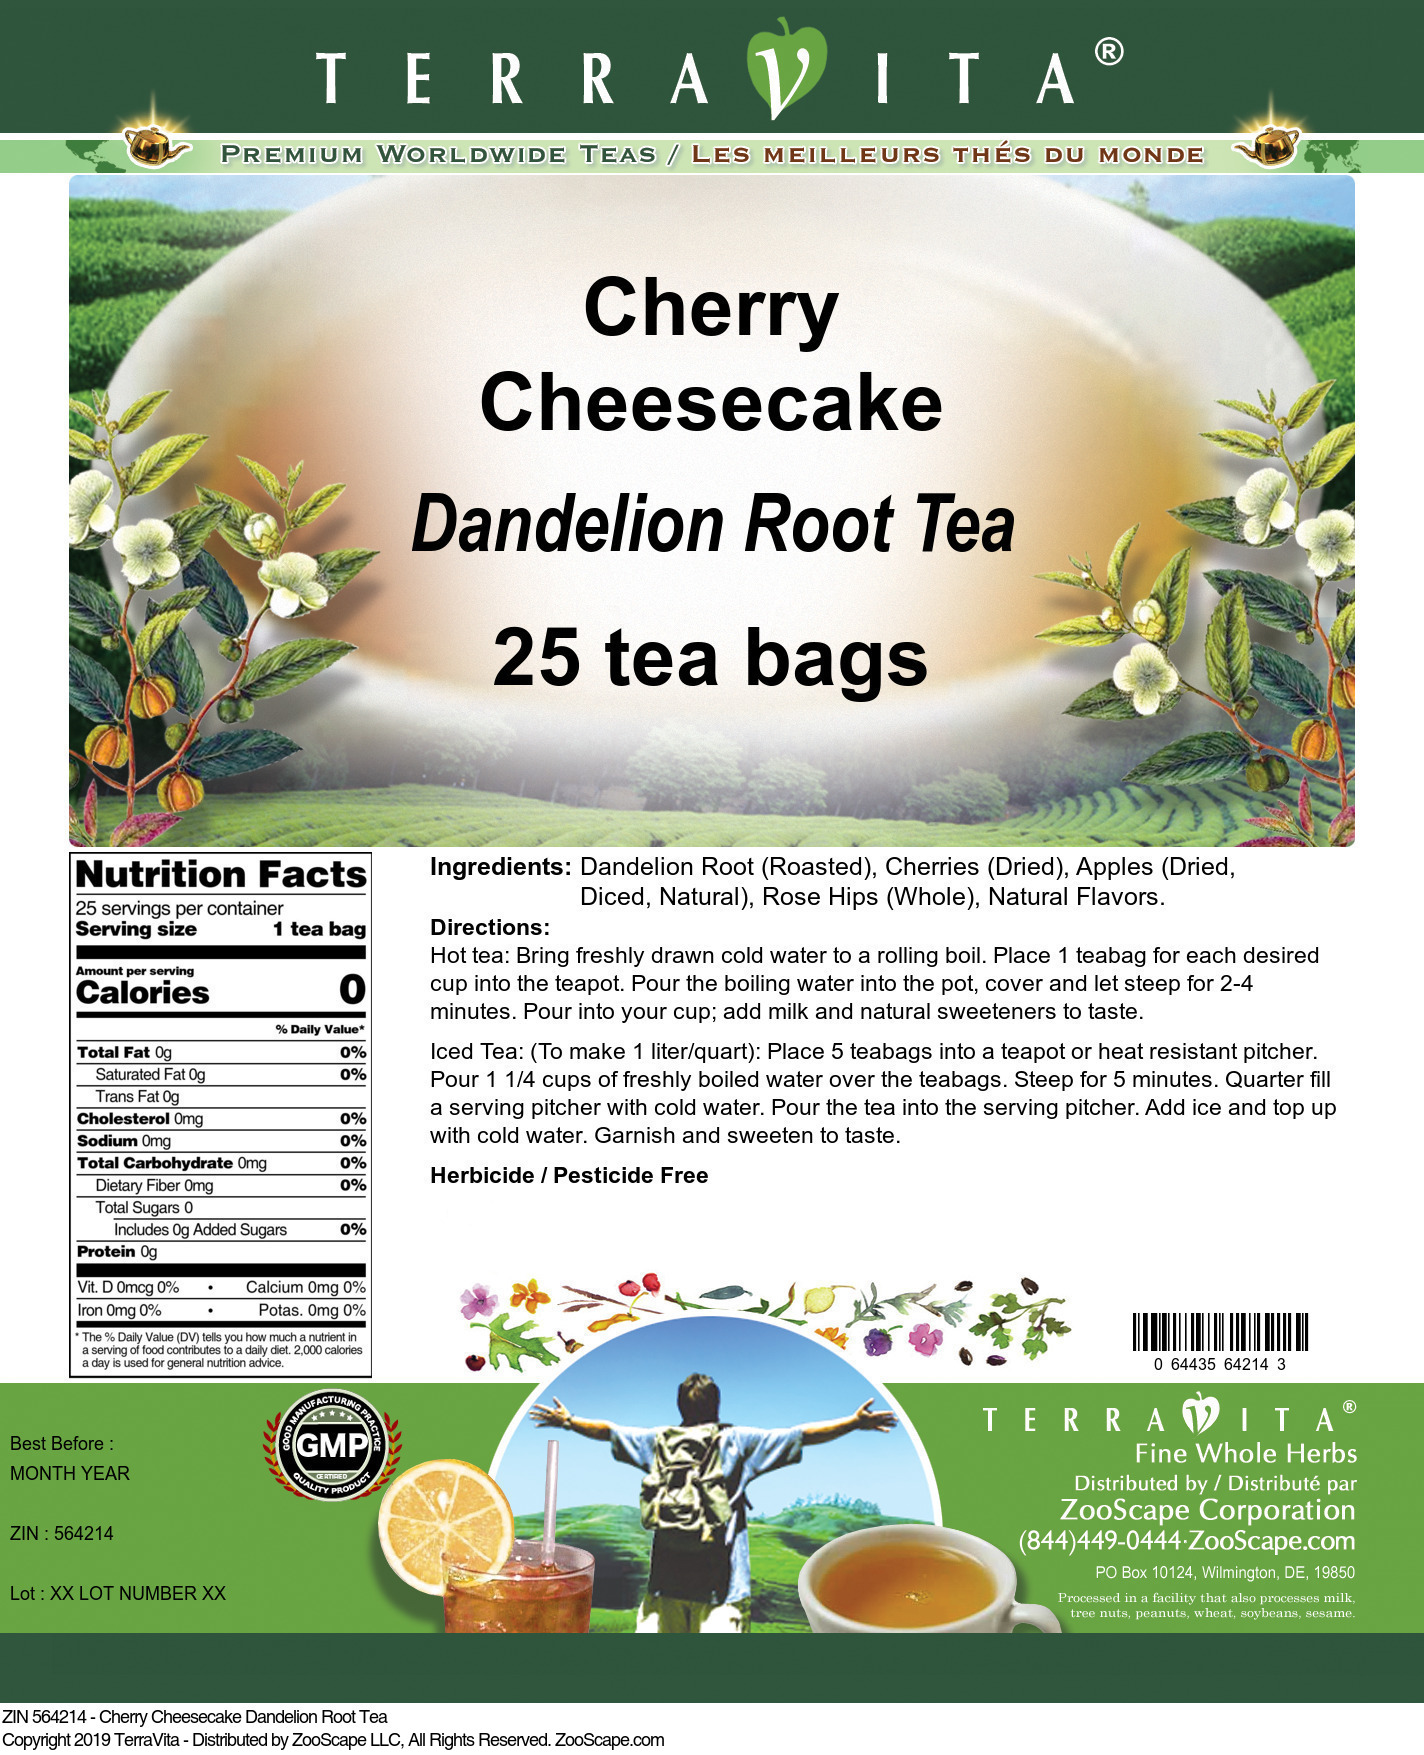 Cherry Cheesecake Dandelion Root Tea - Label